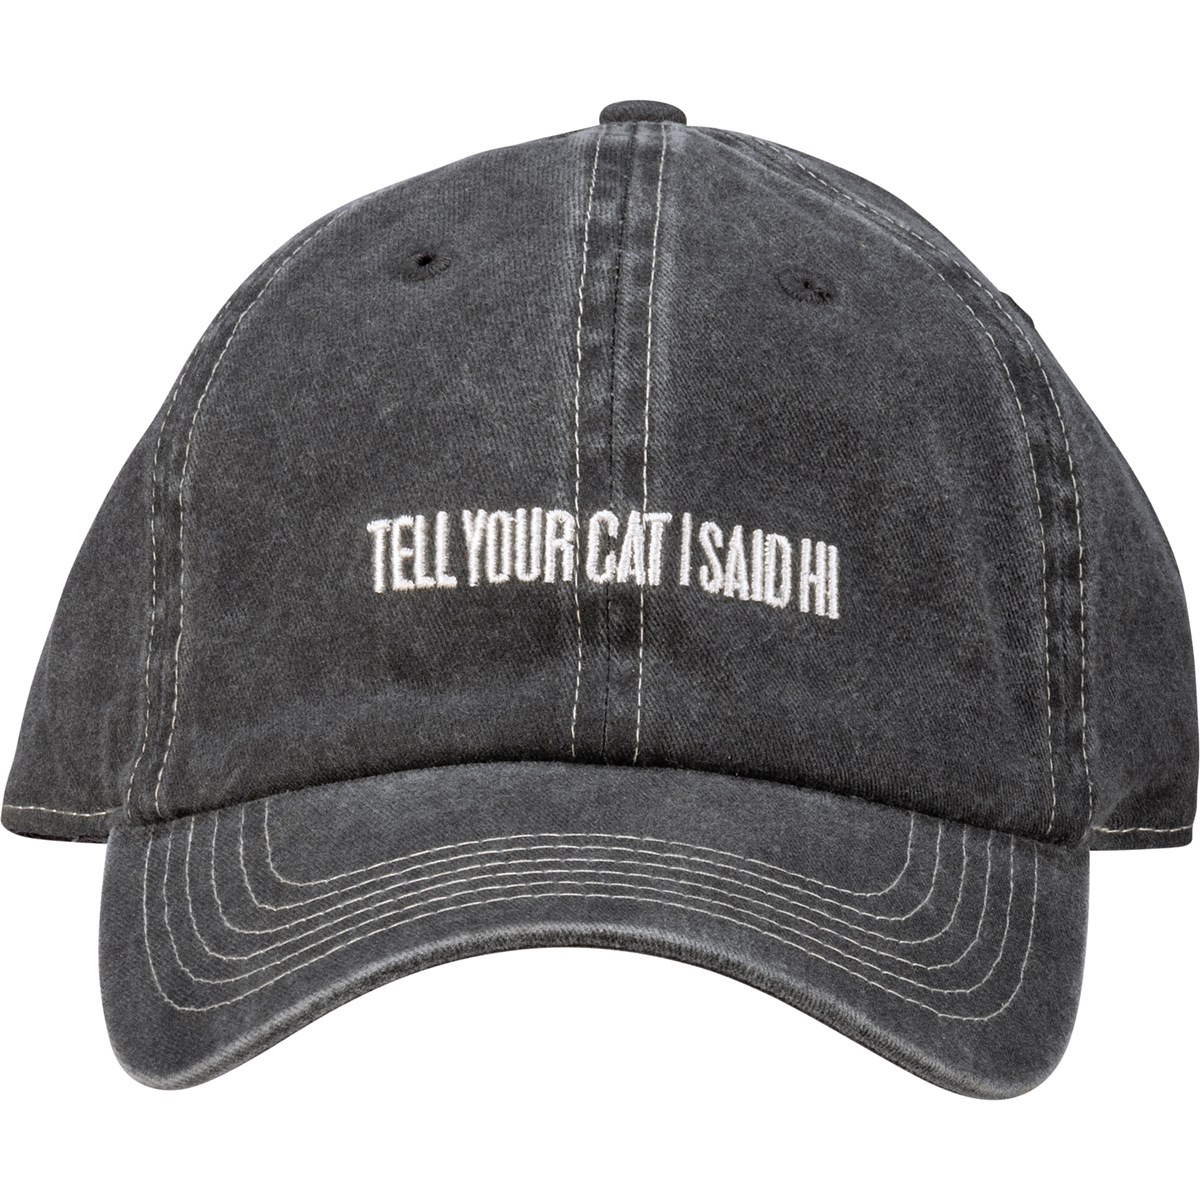 Tell Your Cat I Said Hi Baseball Cap - Cotton, Metal